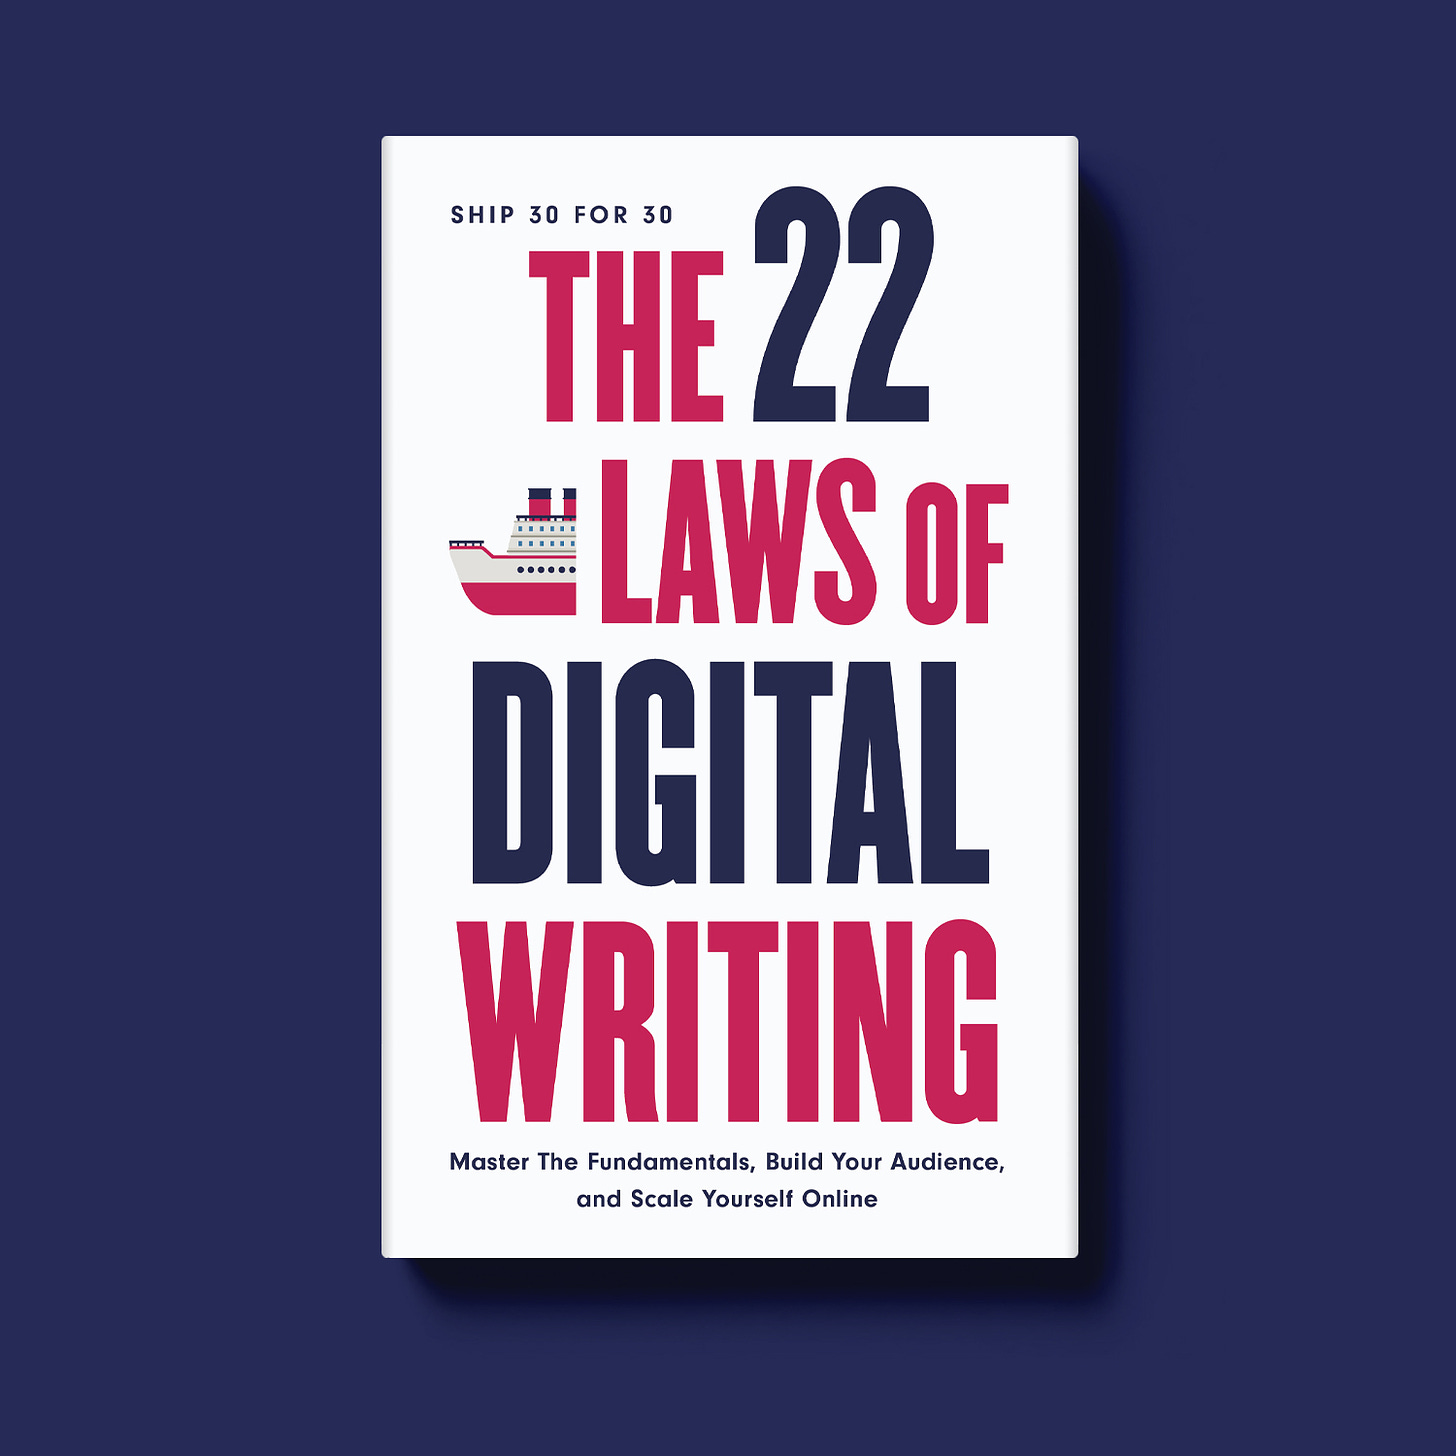 Buy The 22 Laws of Digital Writing eBook